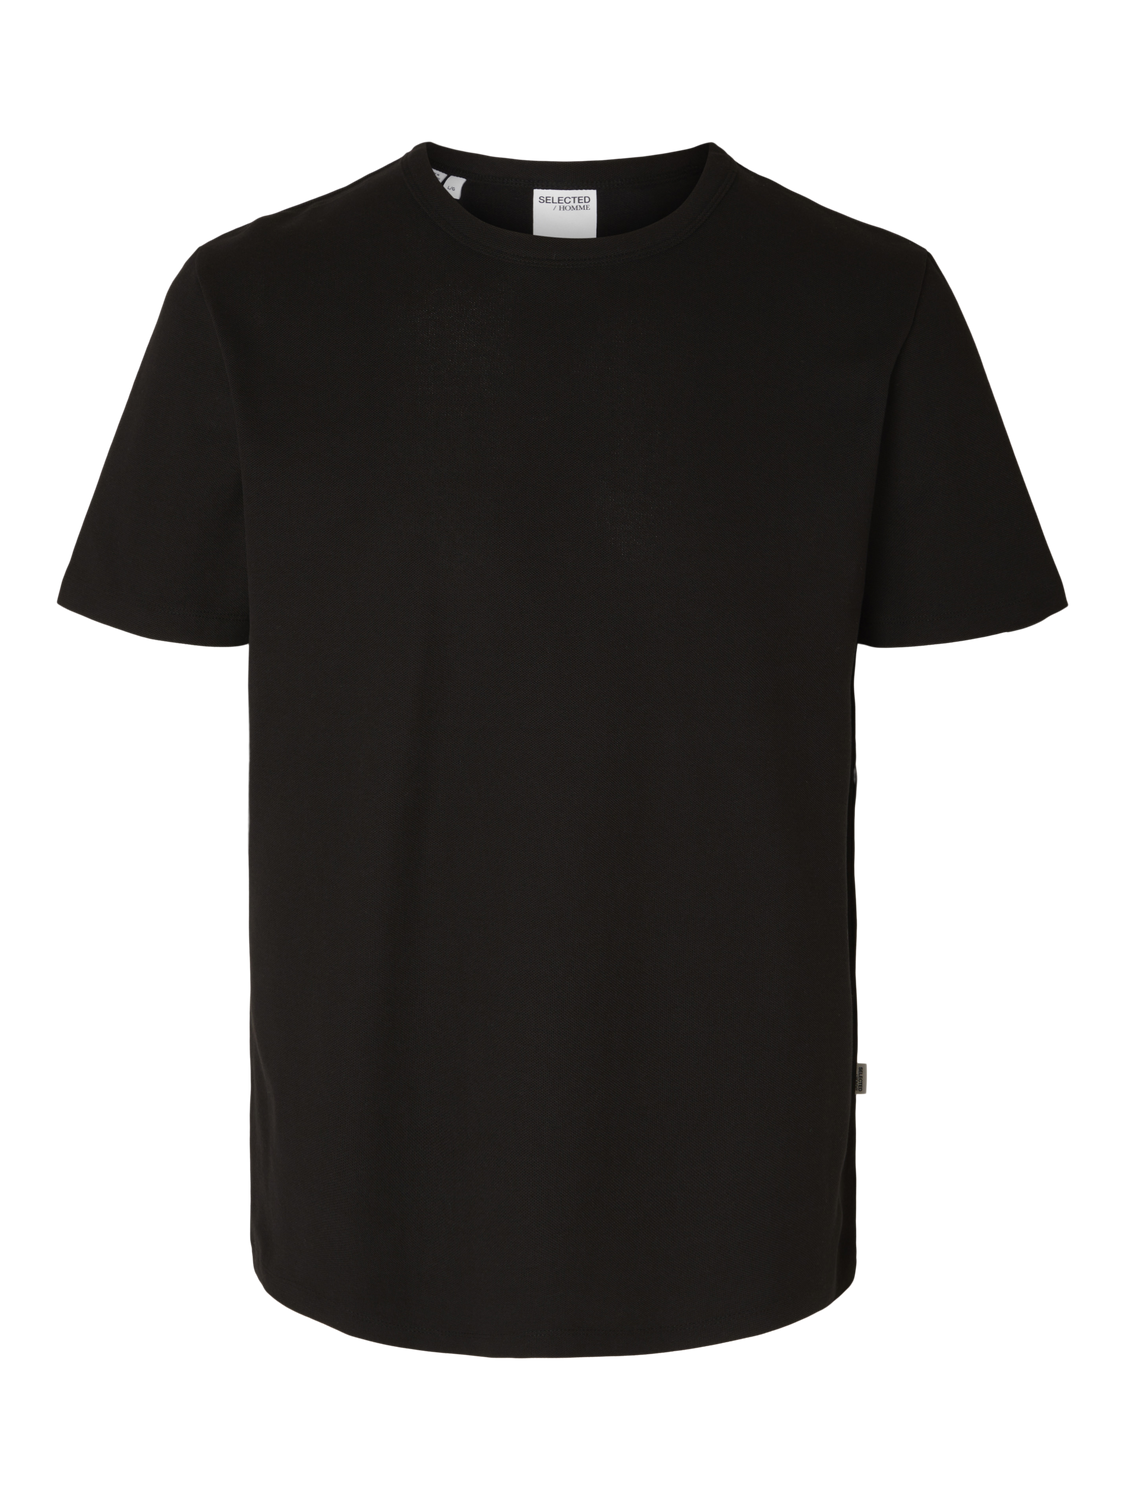 SELECTED HOMME - JOSEPH T-Shirt - Black